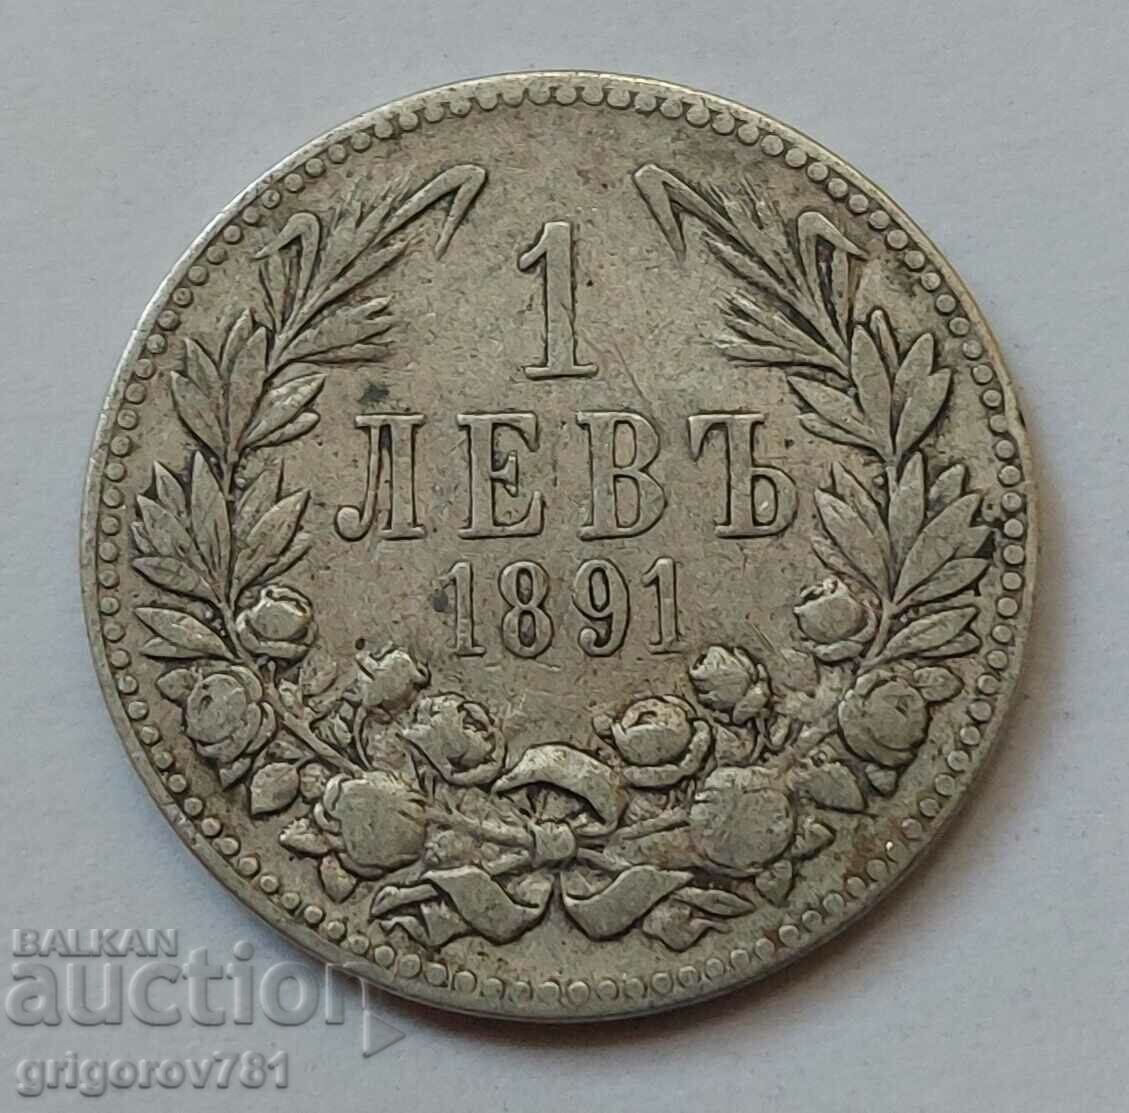 1 lev silver 1891 - silver coin #3